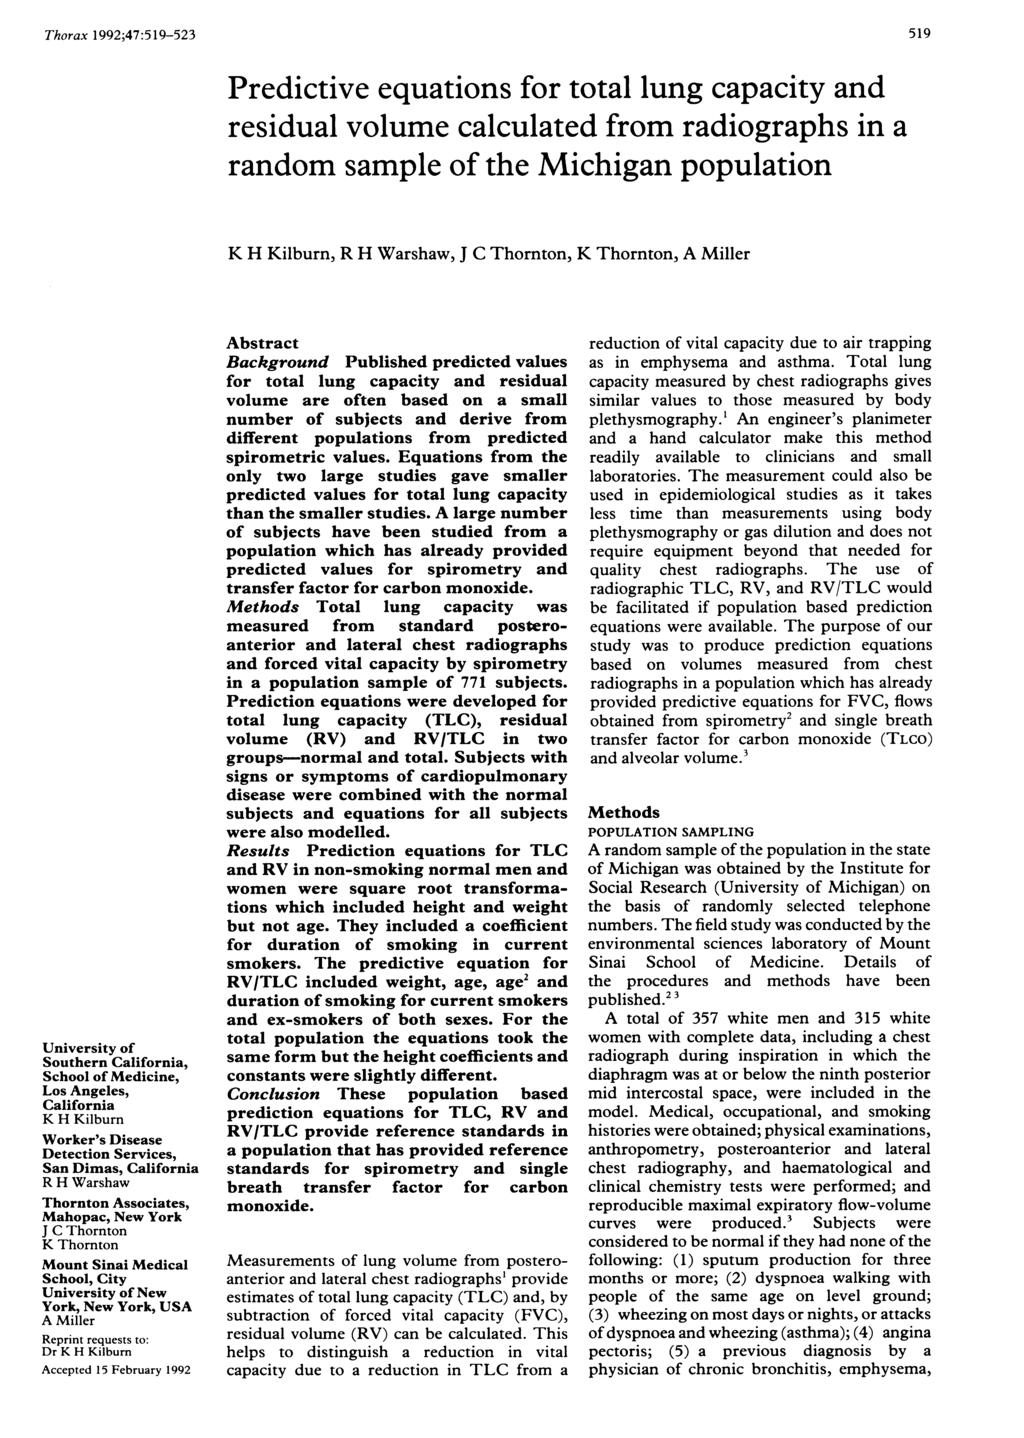 Thorax 1992;47:519-523 University of Southern California, School of Medicine, Los Angeles, California K H Kilburn Worker's Disease Detection Services, San Dimas, California R H Warshaw Thornton